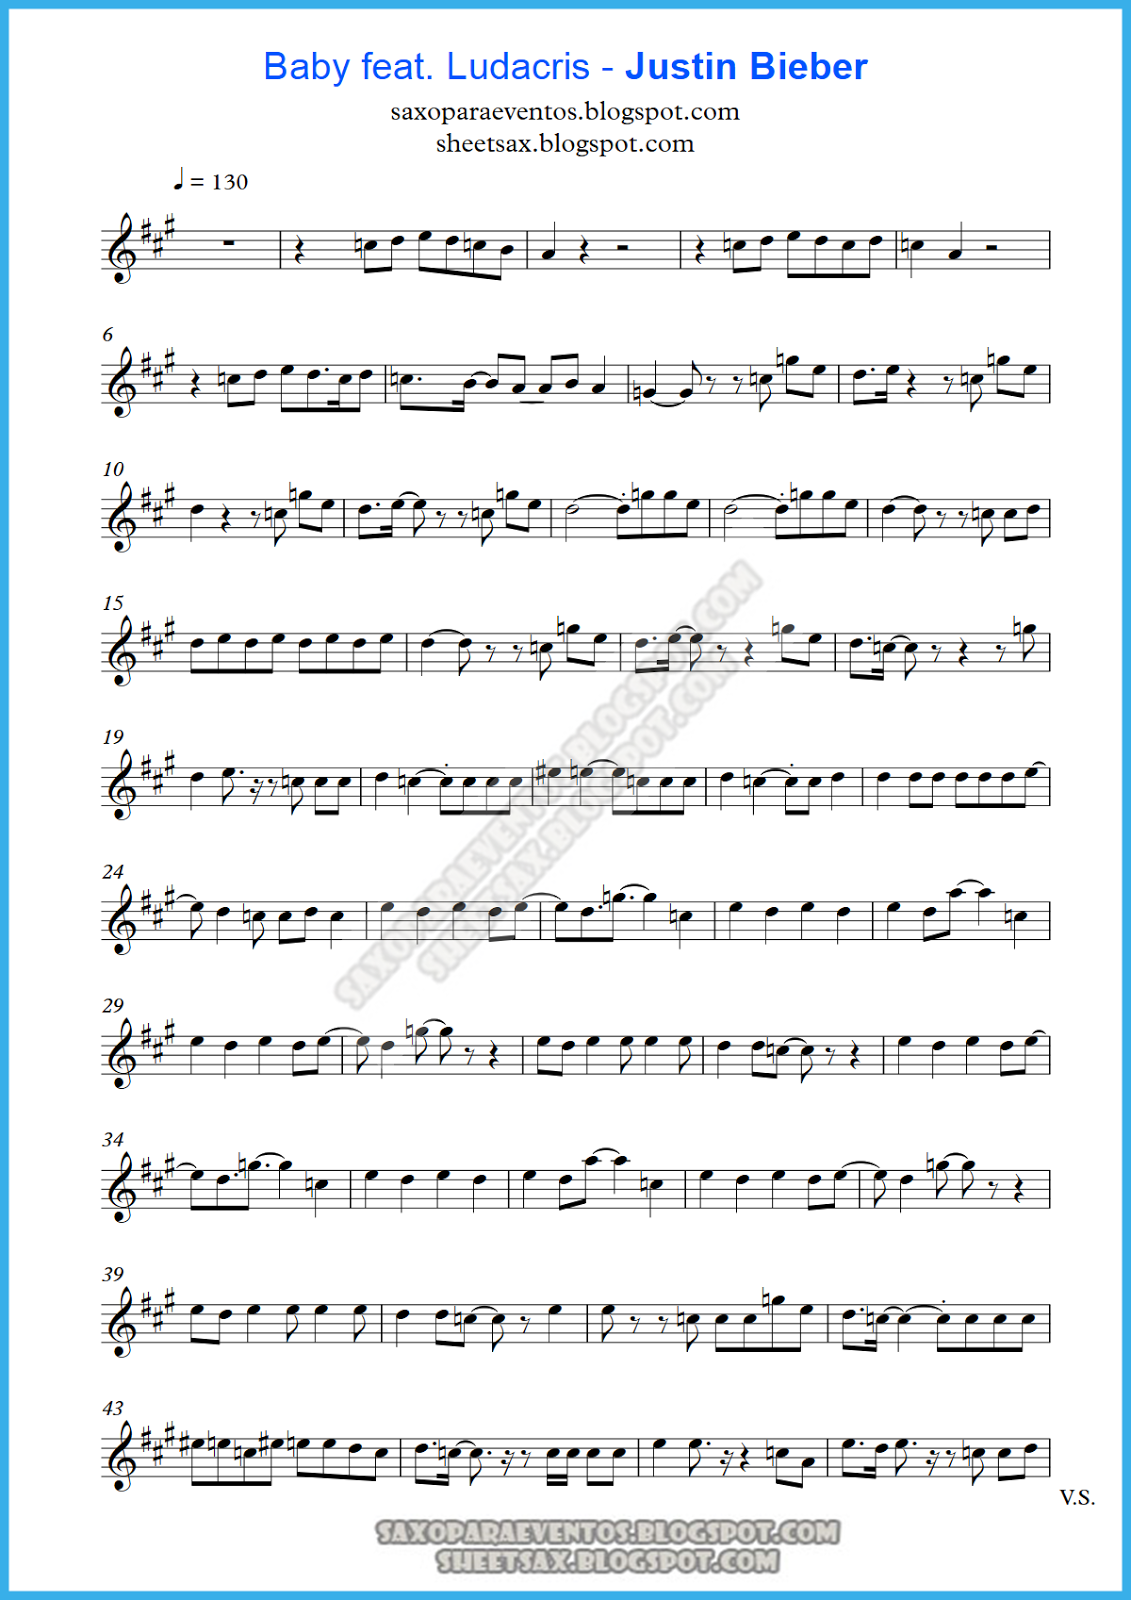 Sheet music (Music score) of Baby by Justin Bieber - Free ...